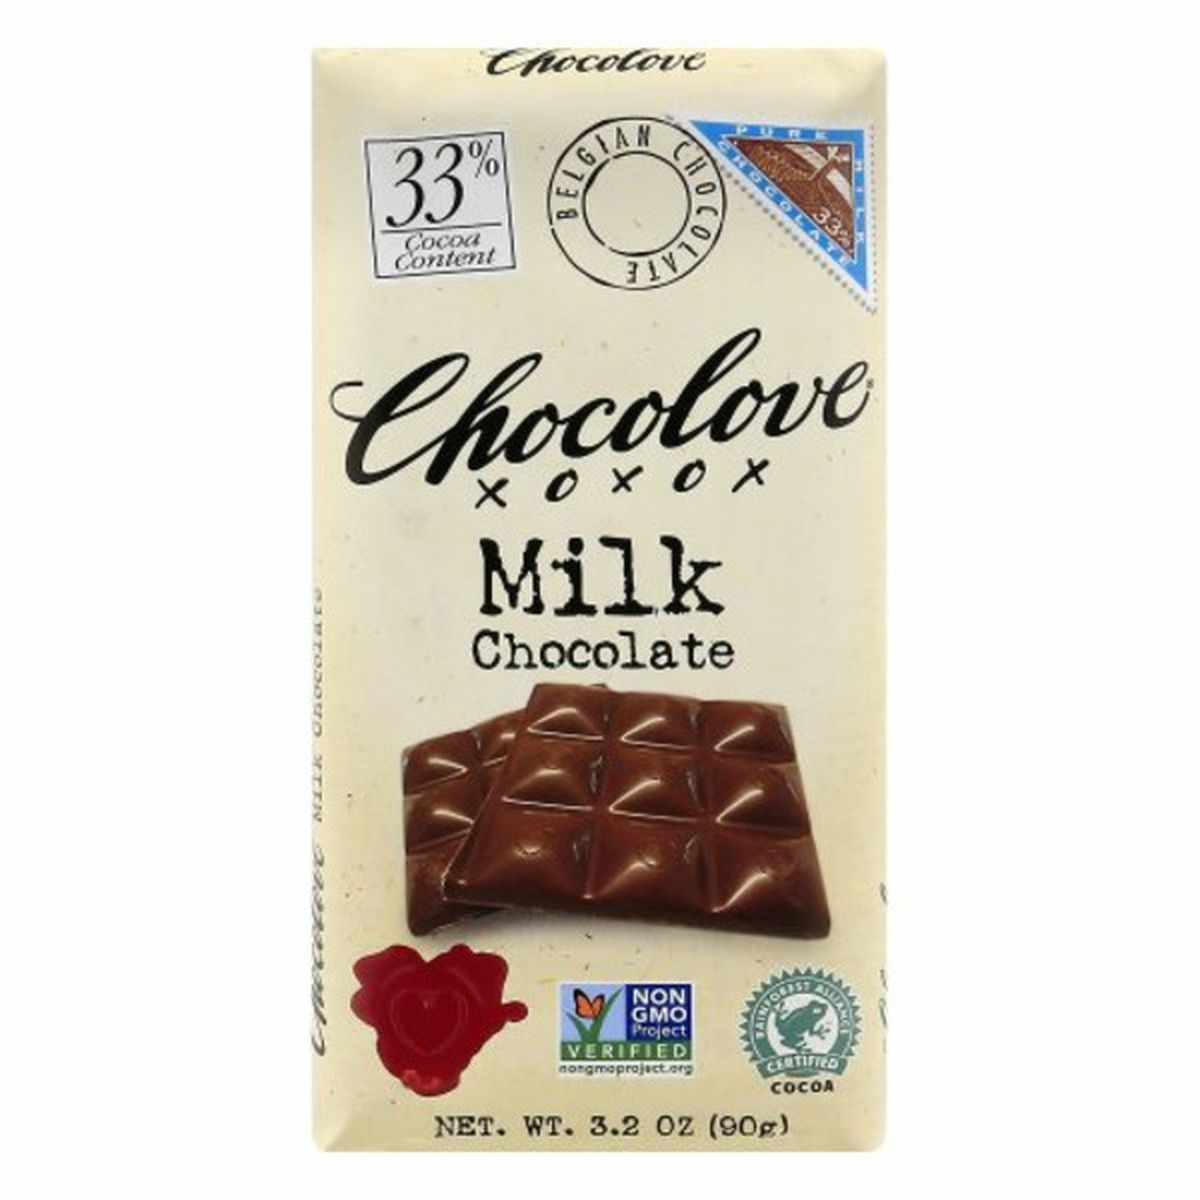 Calories in Chocolove Milk Chocolate, 33% Cocoa